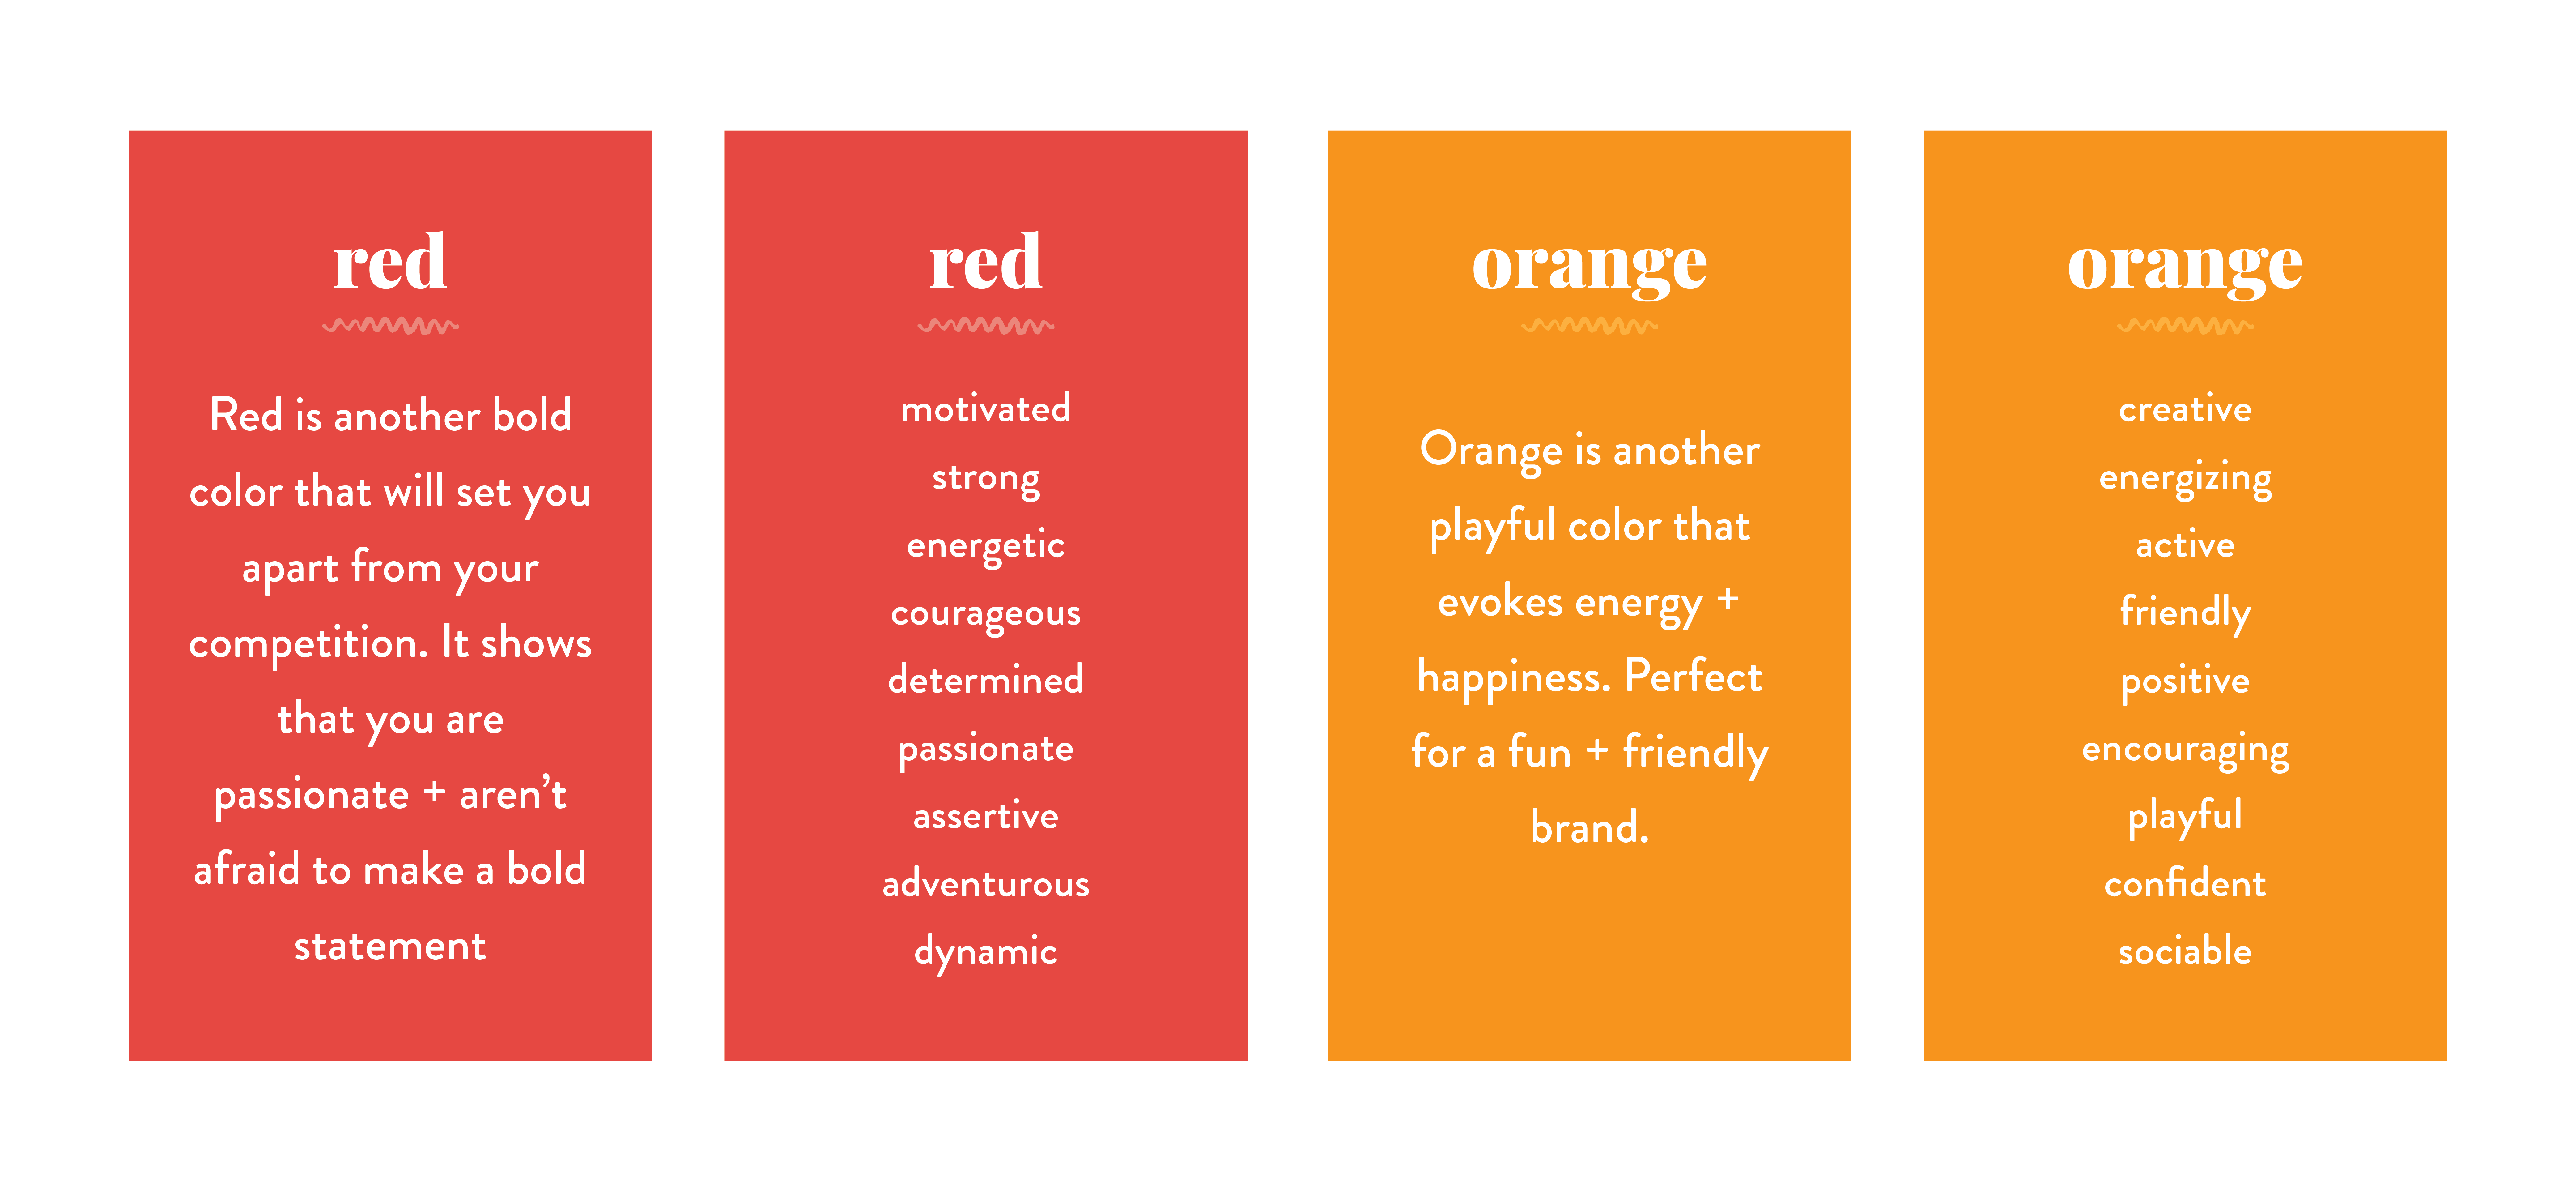 Psychology behind red and orange